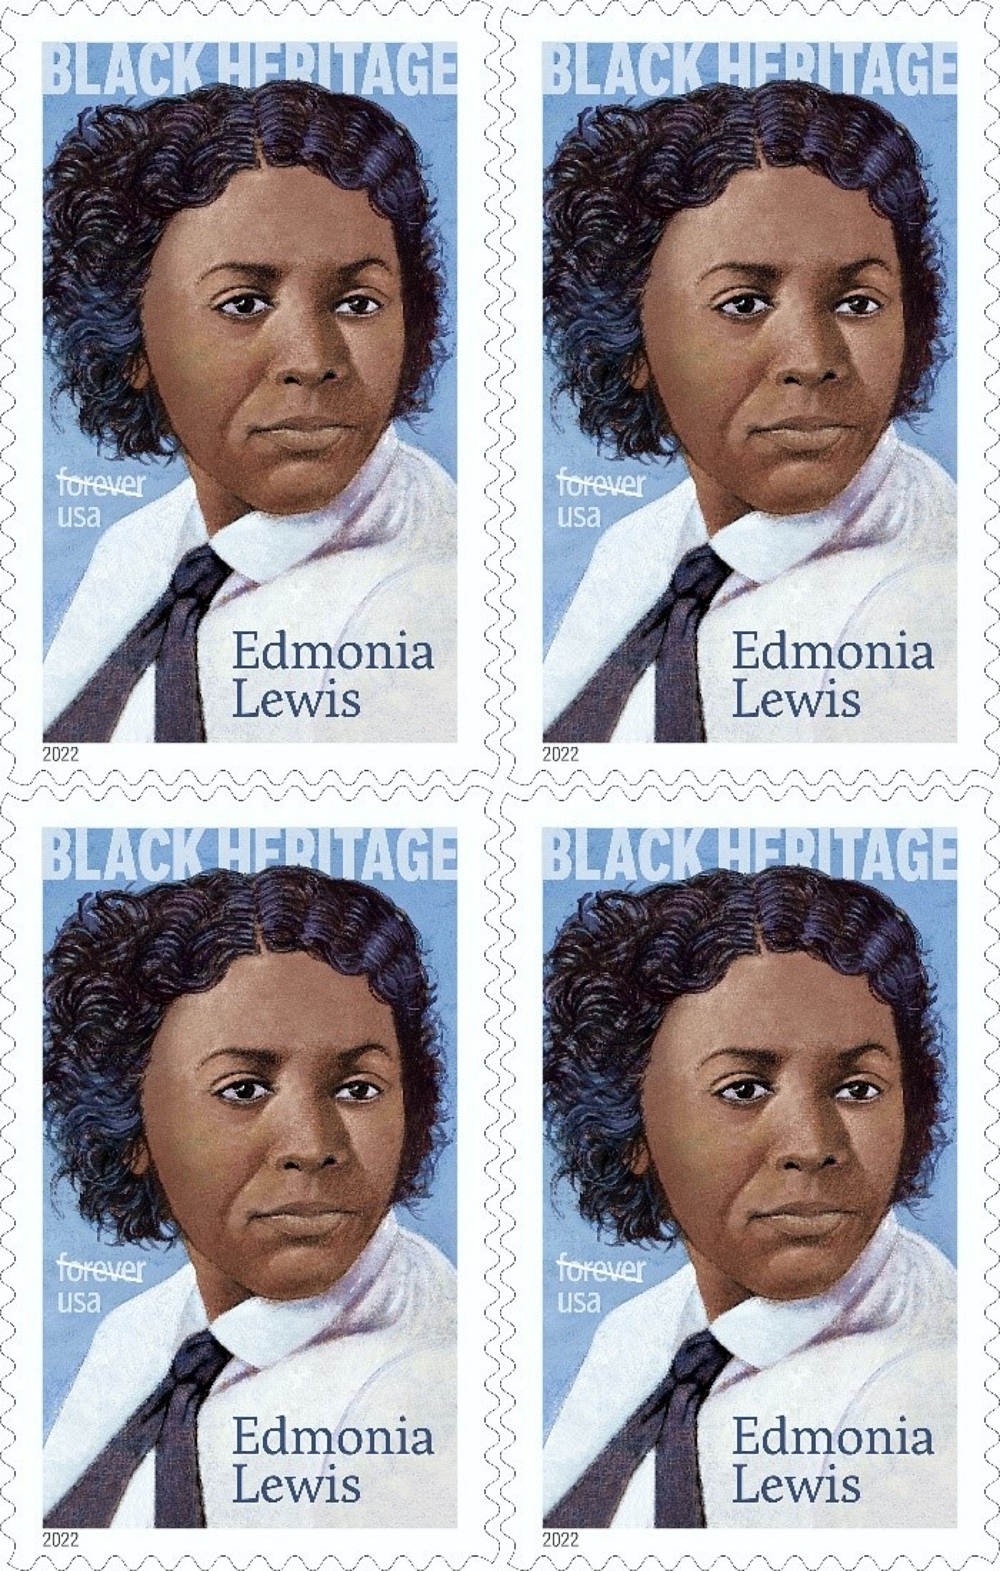 Edmonia Lewis 2022 Forever stamp